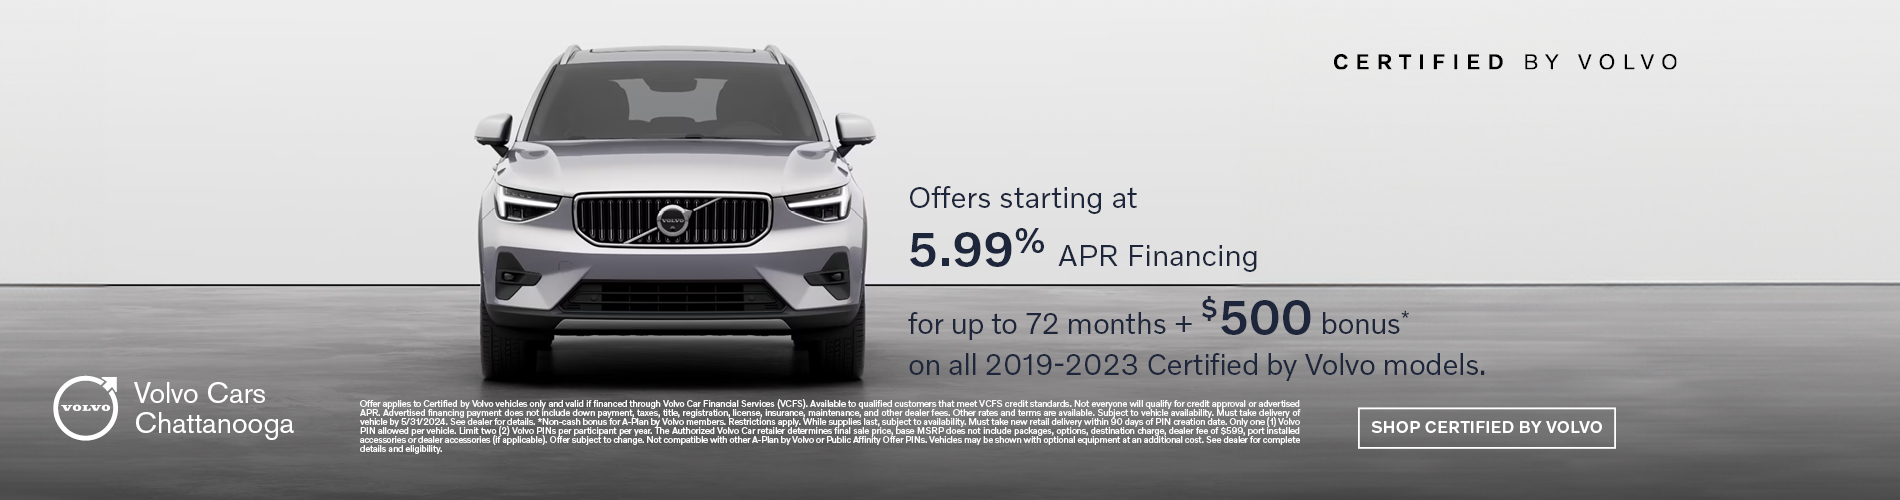 Certified 2019-2023 Volvos 5.99% APR